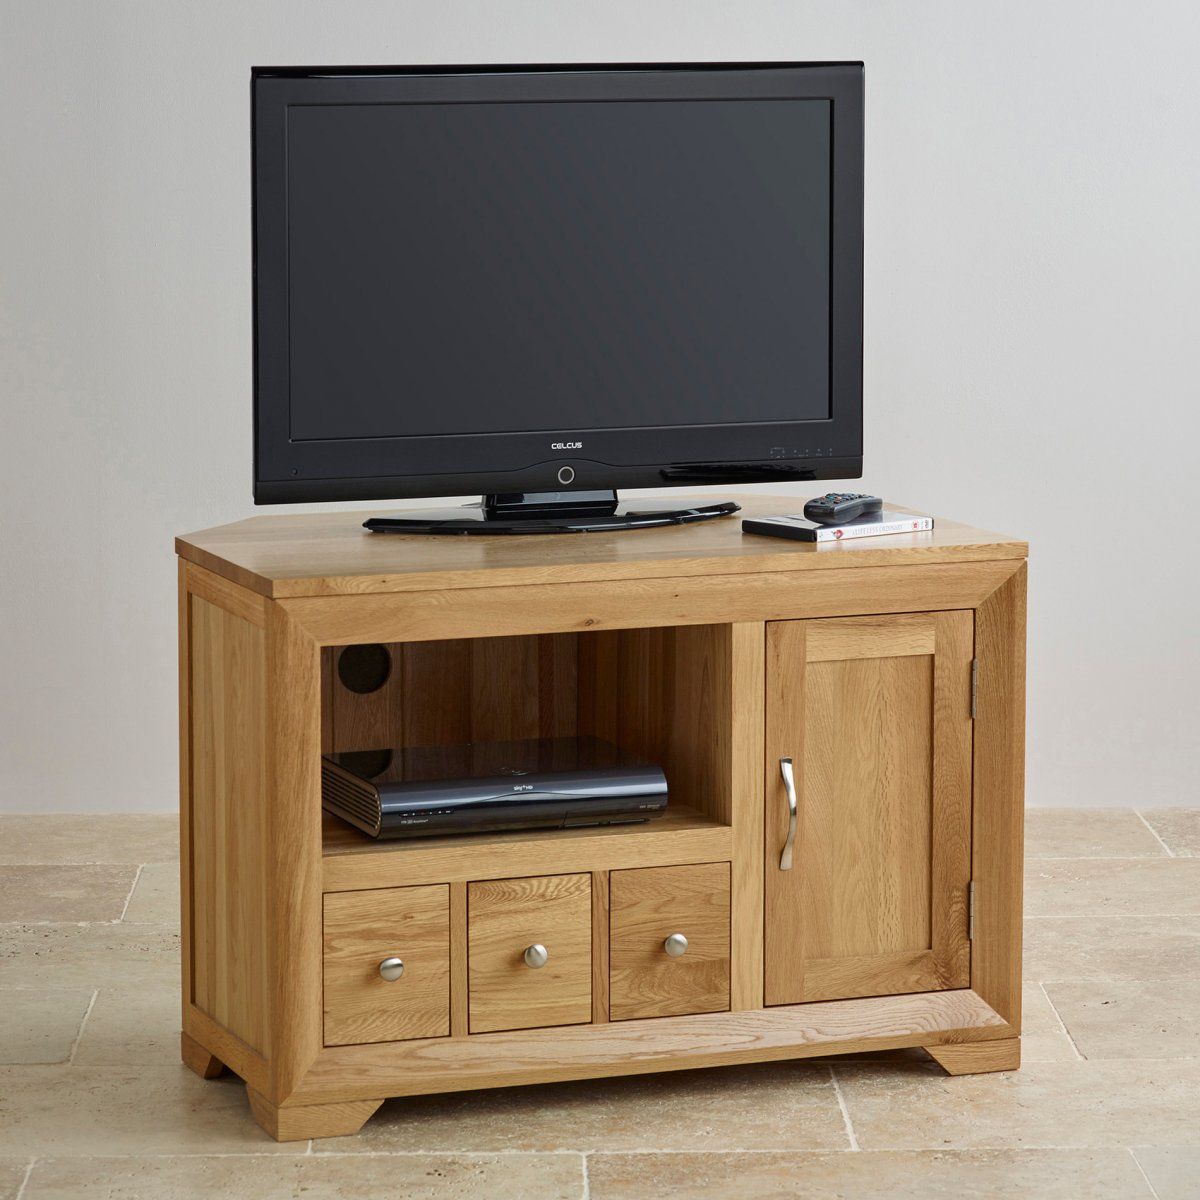 Bevel Small Corner Tv Cabinet In Solid Oak | Oak Furniture With Regard To Oak Corner Tv Cabinets (View 7 of 15)